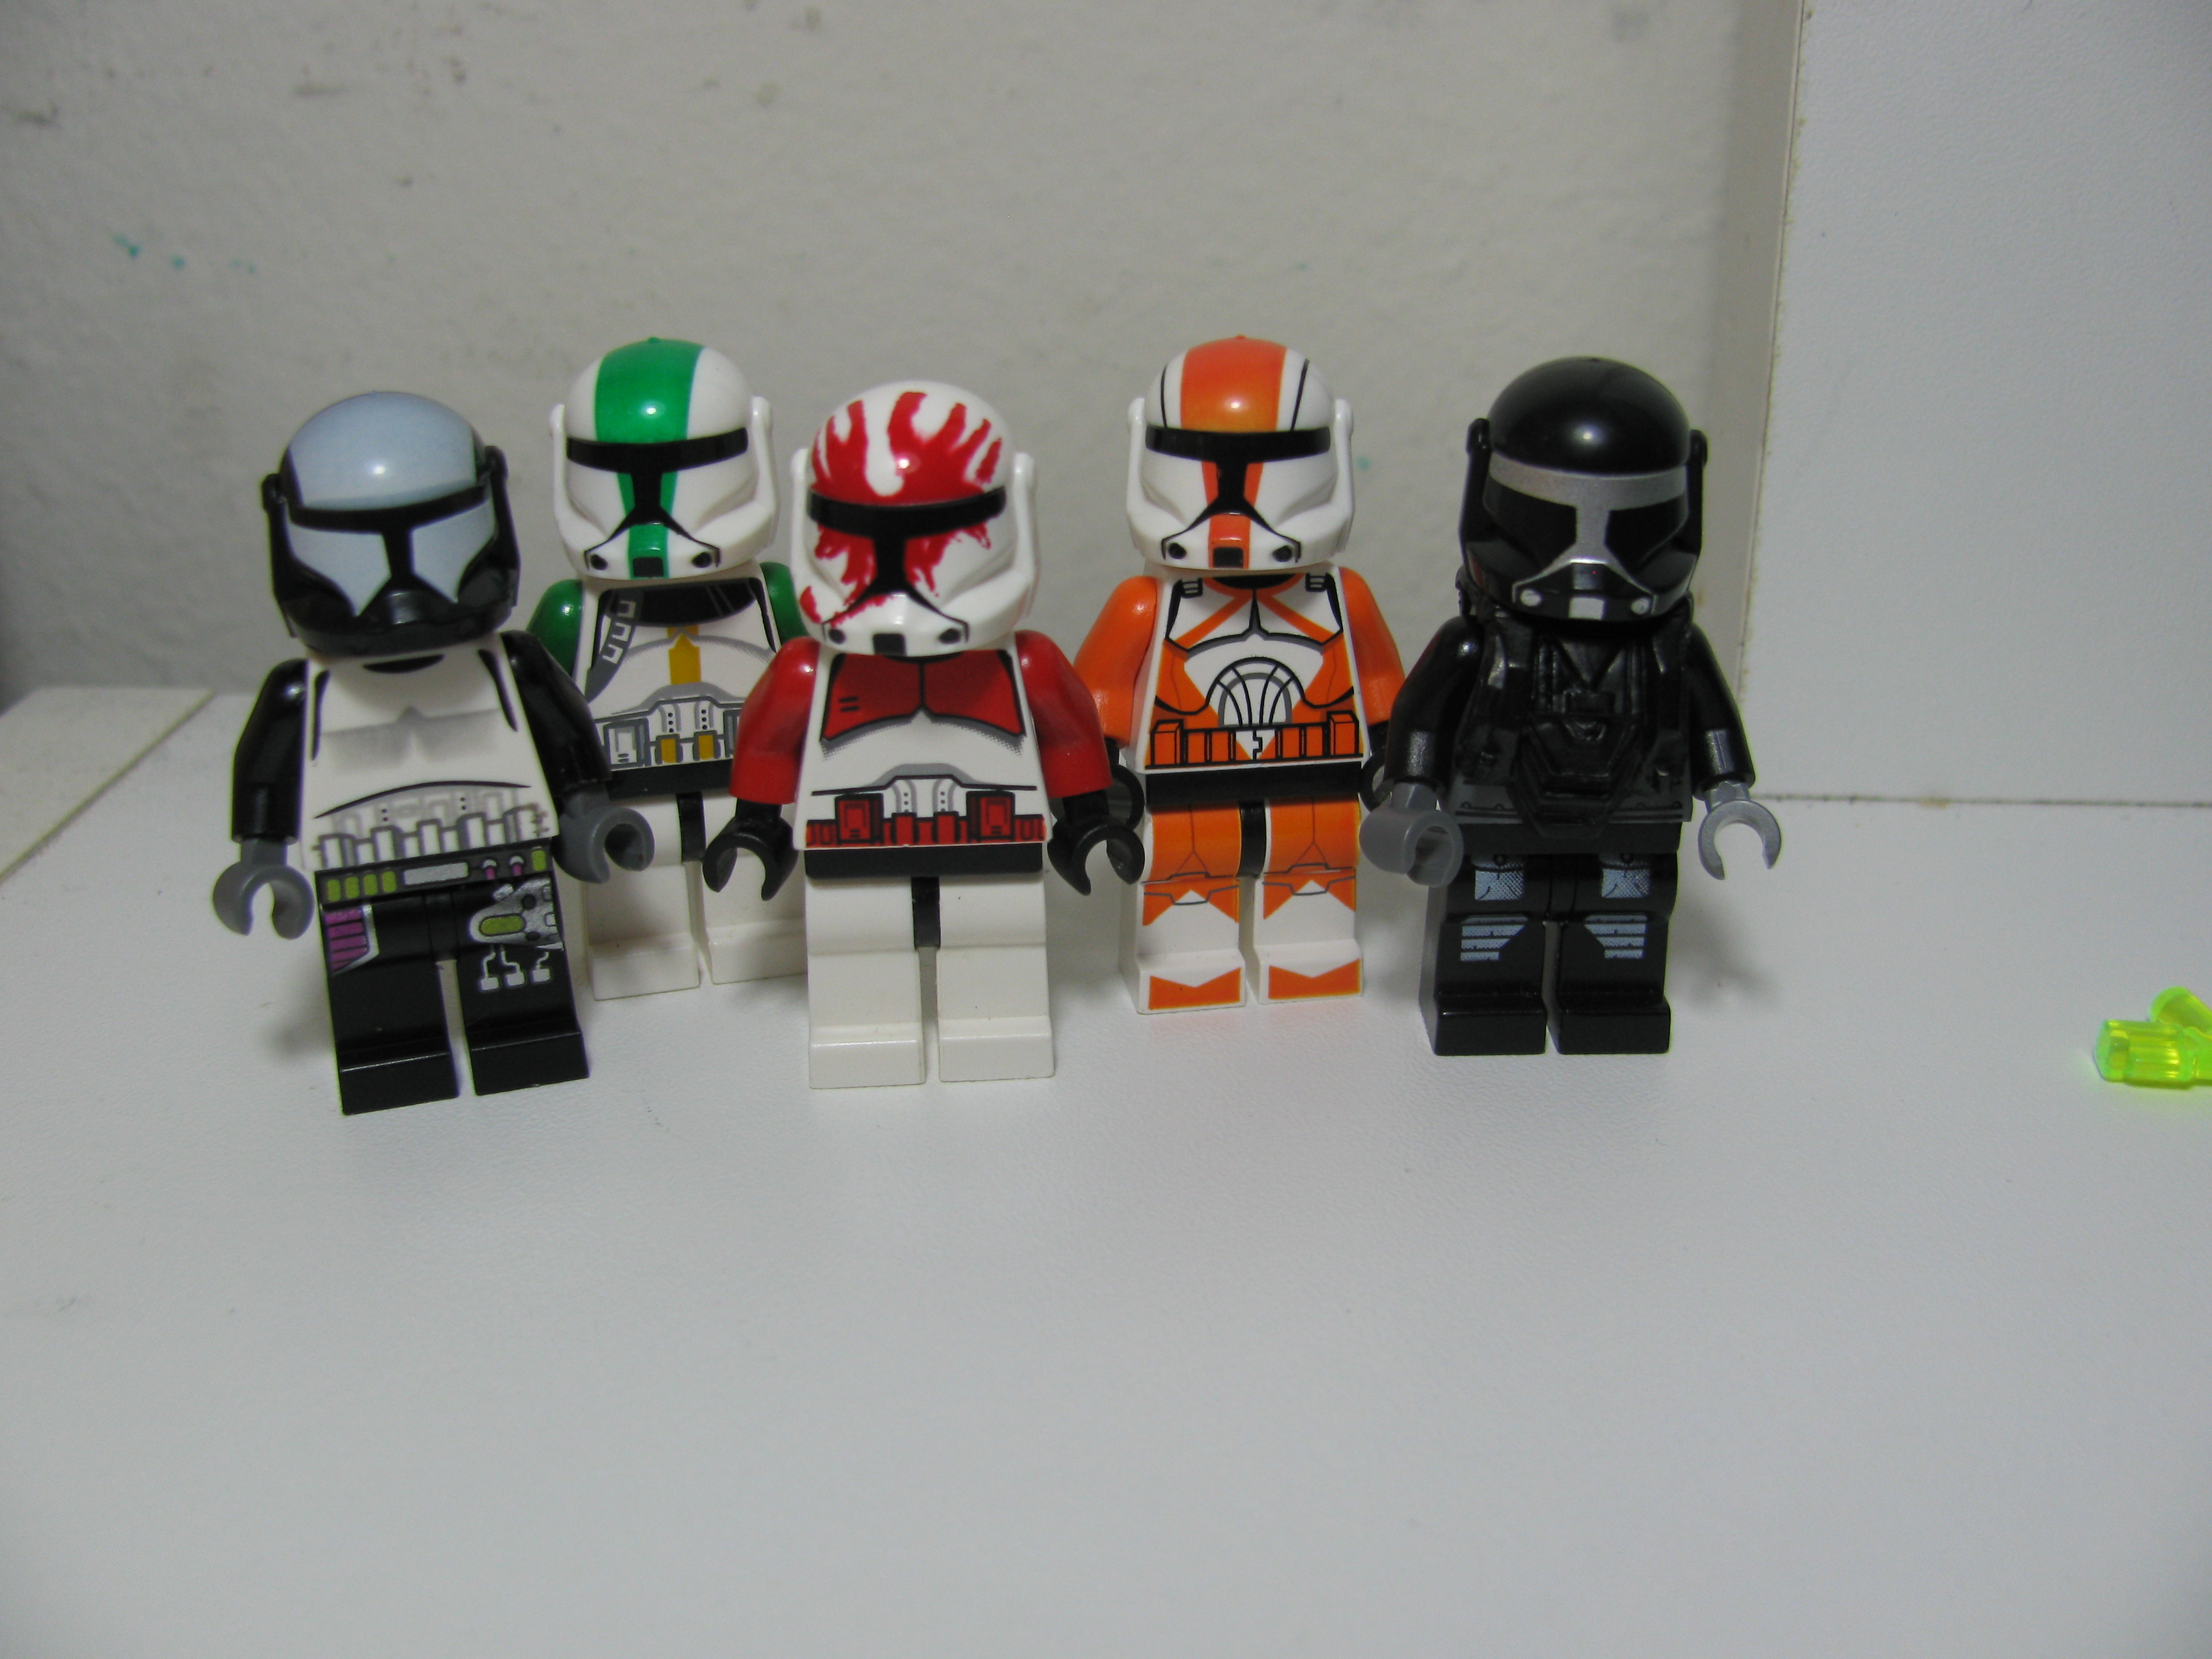 Custom Star Wars Sev Commando v2 minifigures clone trooper on lego bricks